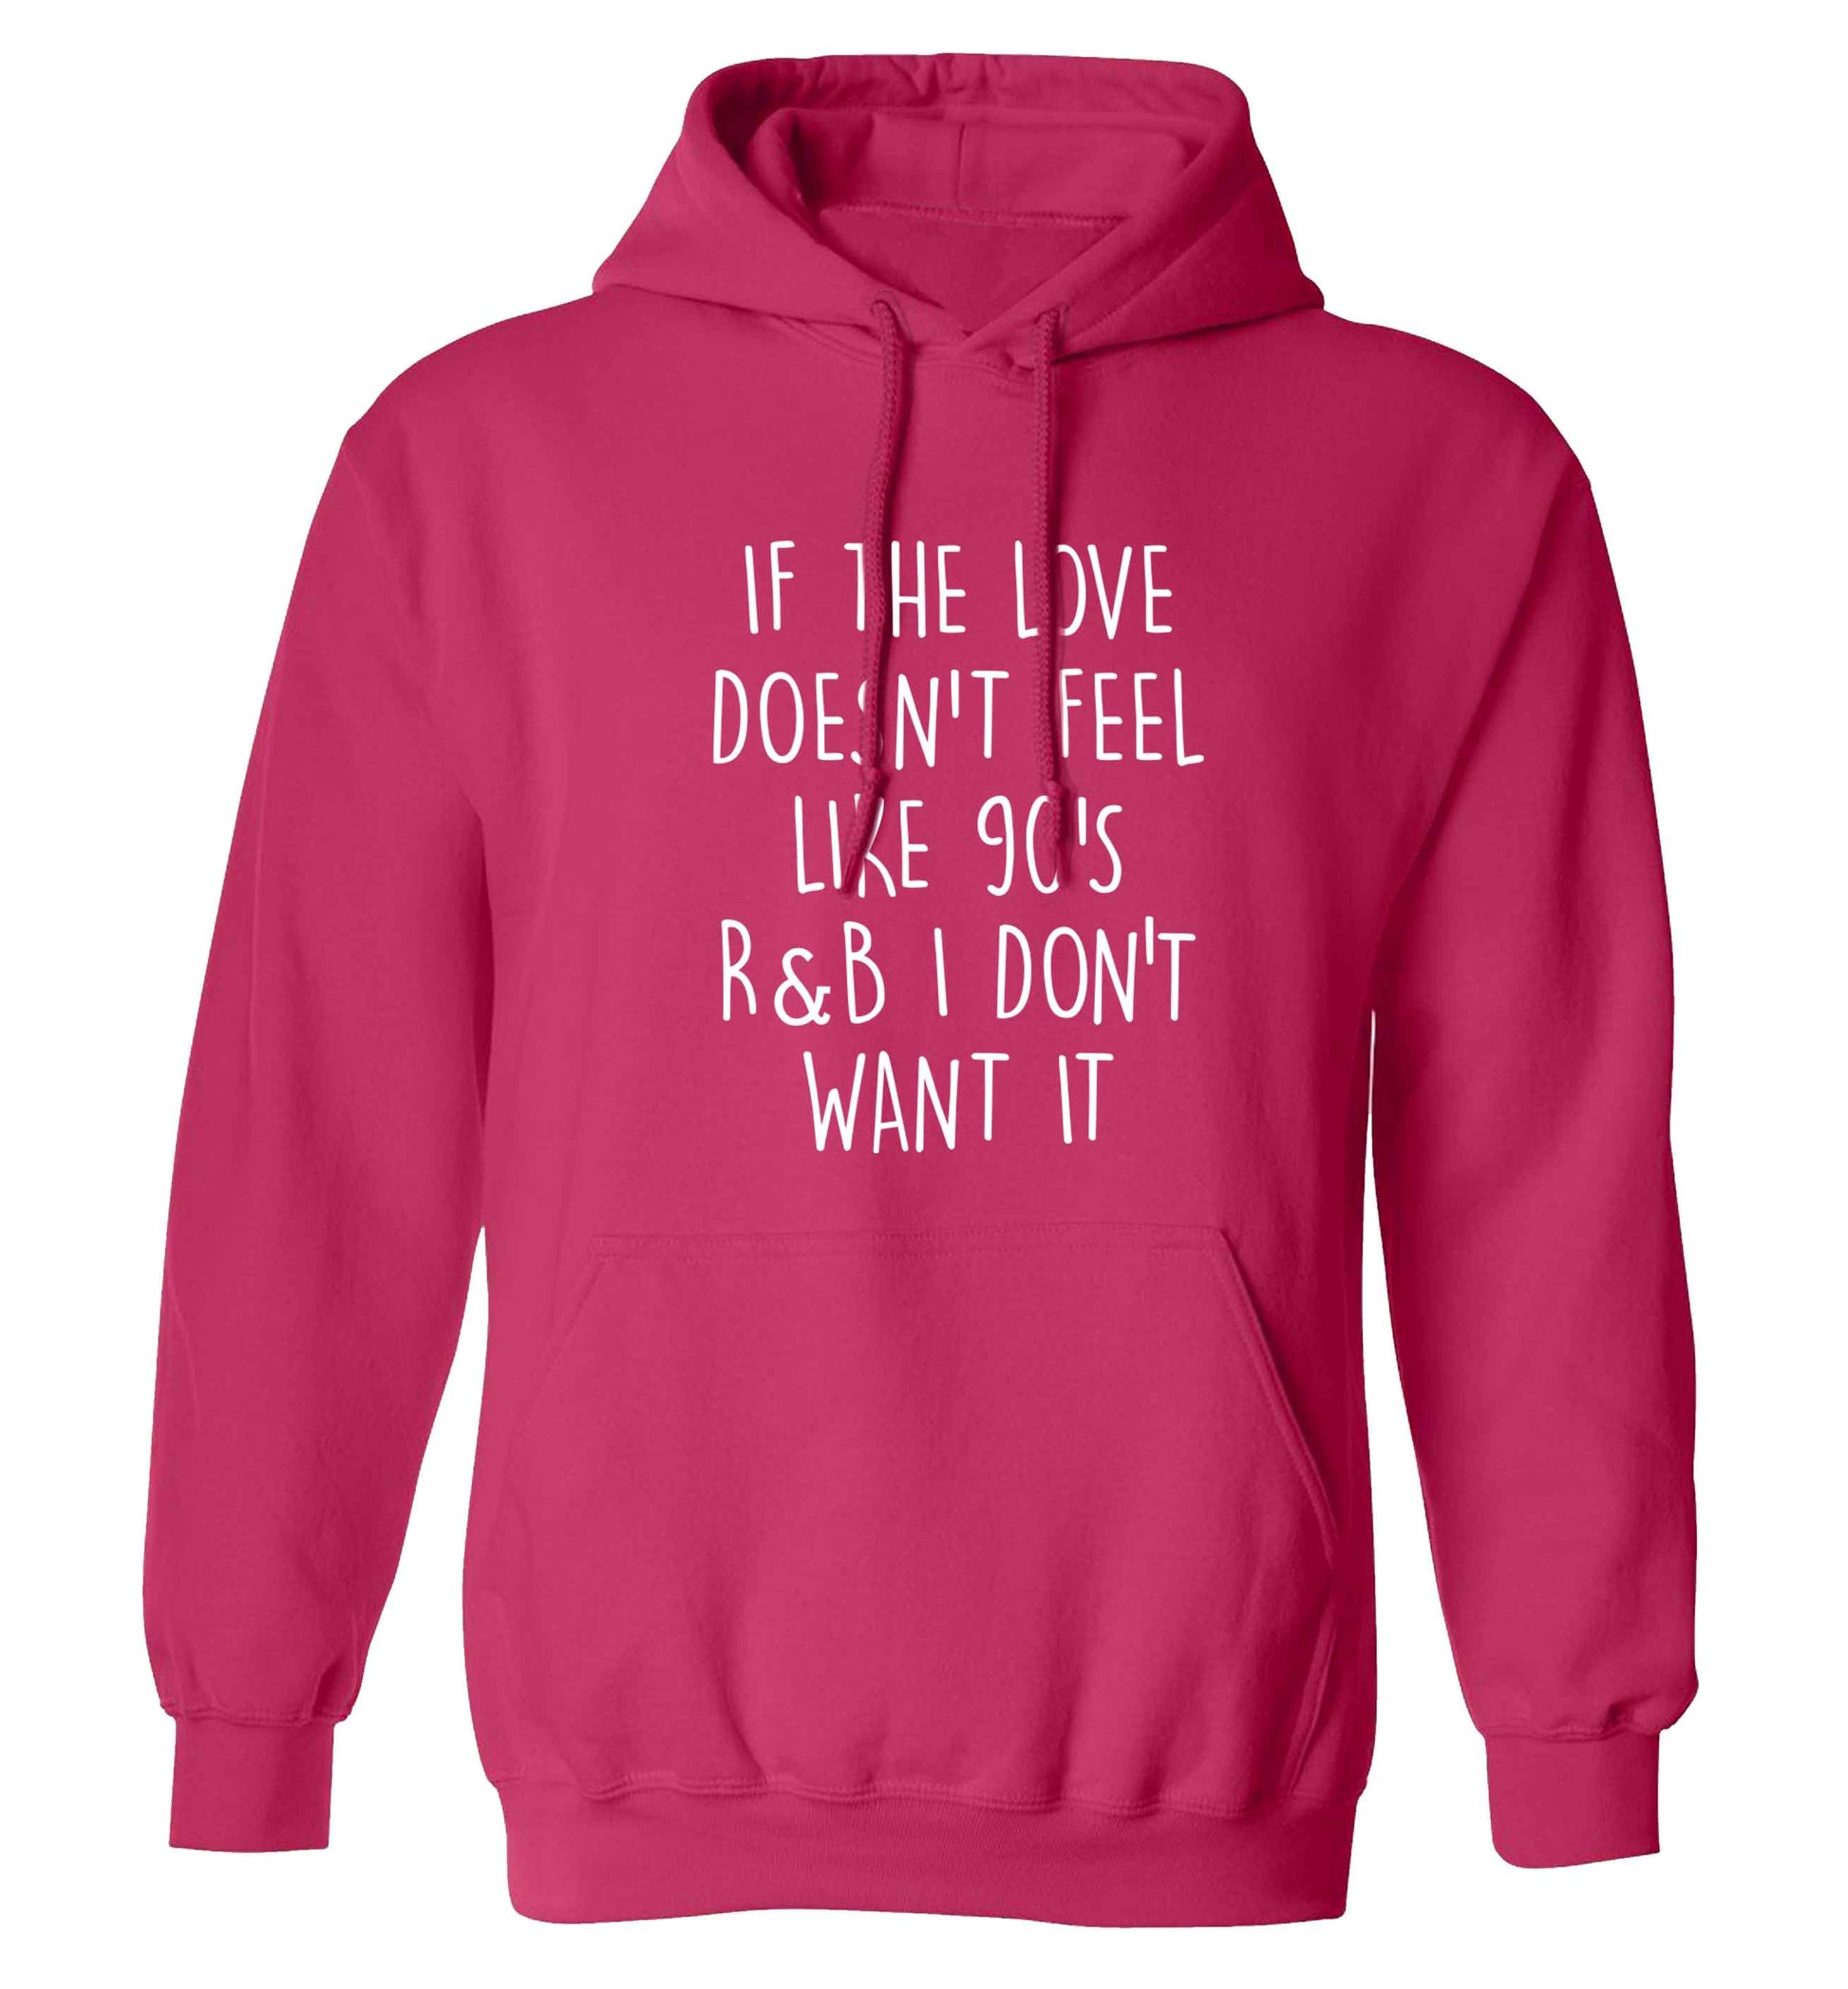 If the love doesn't feel like 90's r&b I don't want it adults unisex pink hoodie 2XL